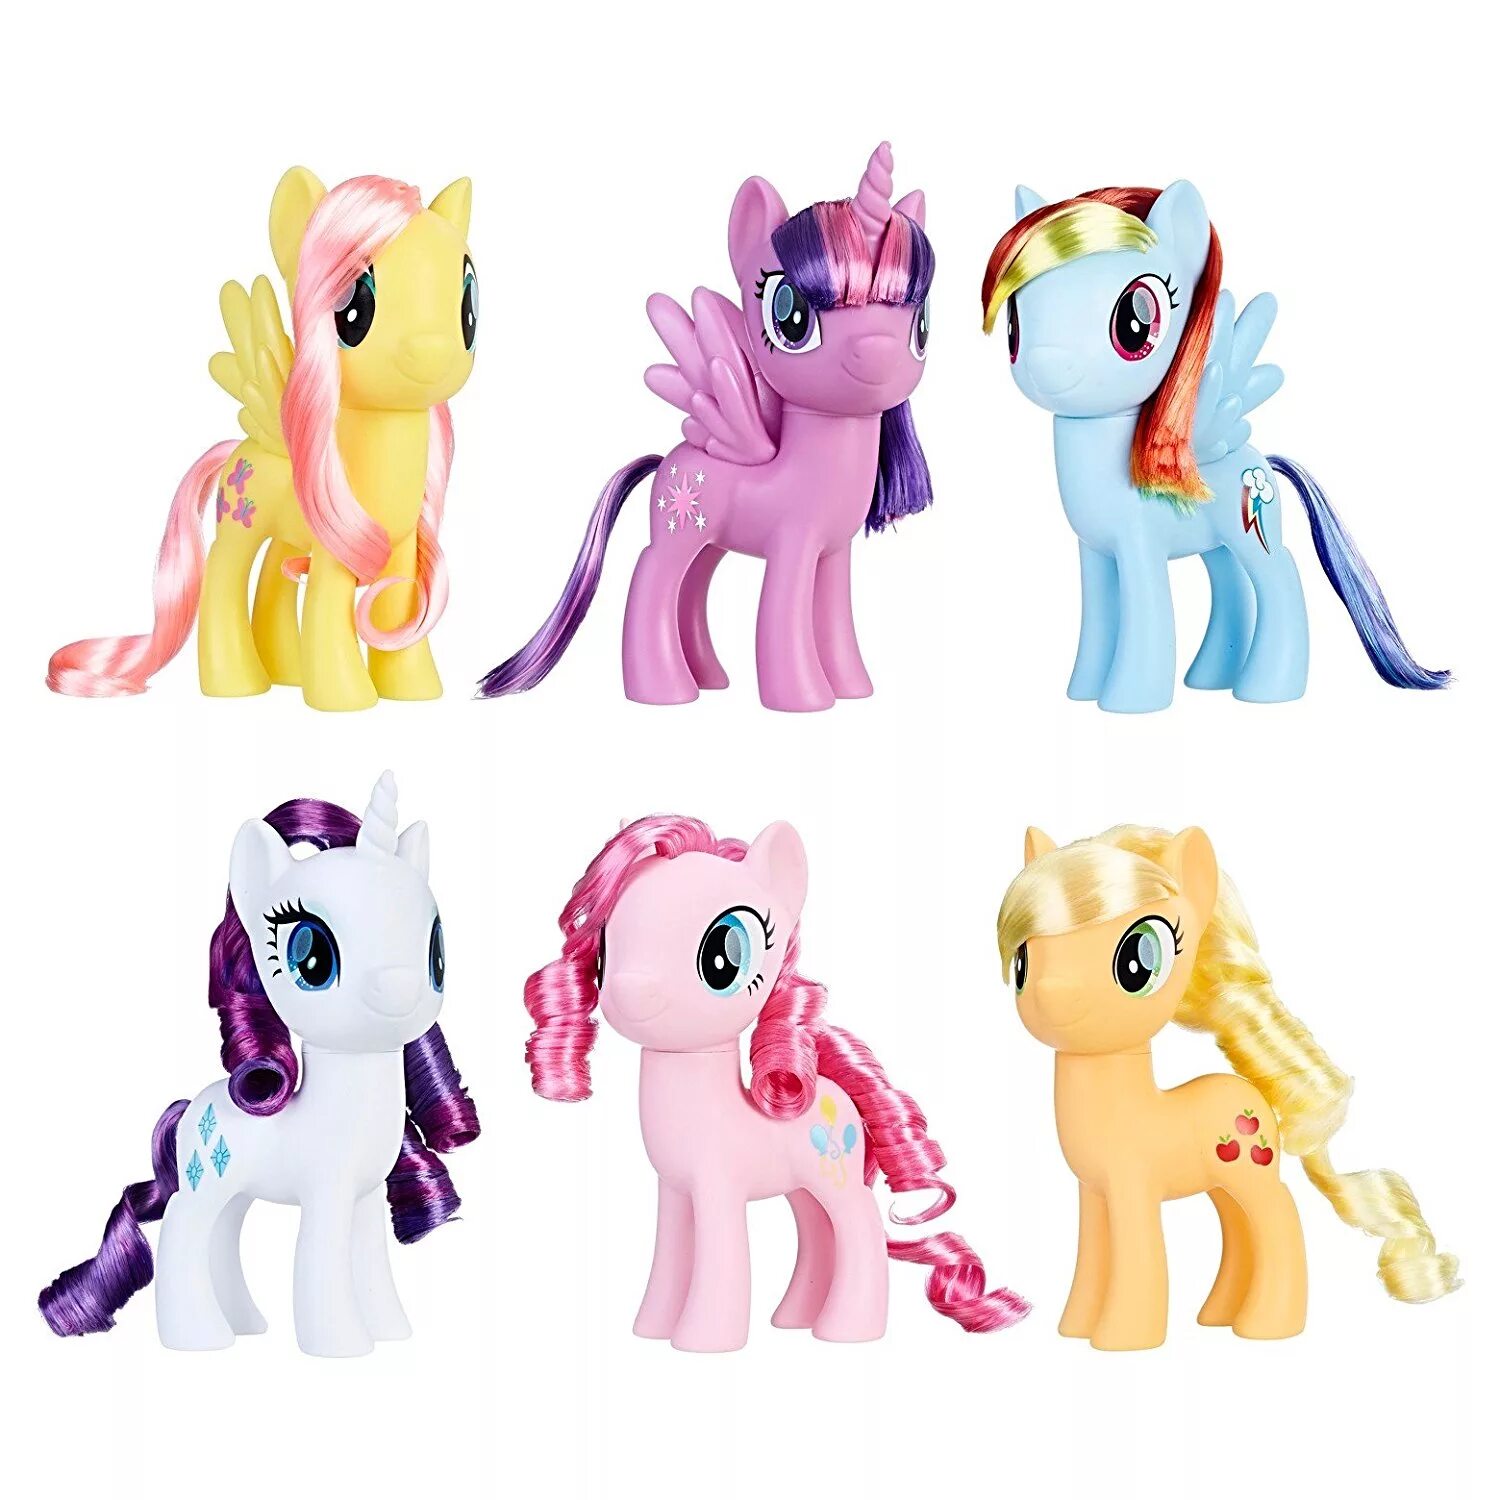 My little pony сборник. Игровой набор my little Pony 6 мега пони [f17835l0]. Набор май Литтл пони из 6 пони. My little Pony коллекция Friendship Magic. My little Pony Hasbro набор 6 пони.